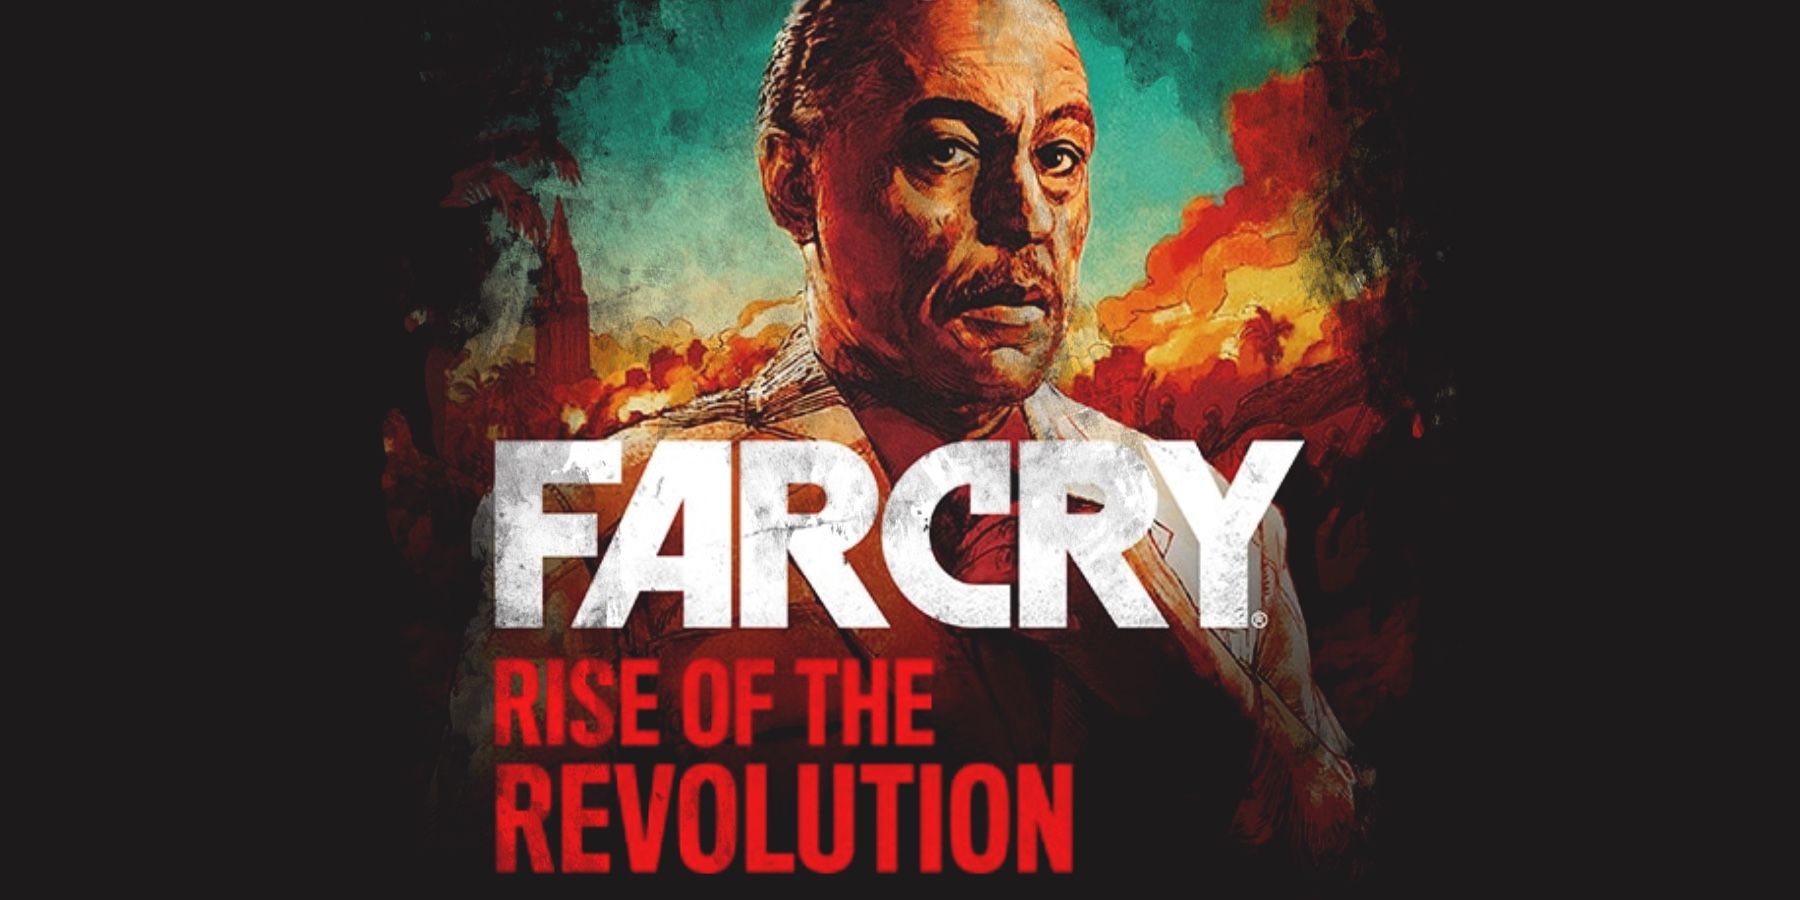 Far Cry Rise of the Revolution Giancarlo Esposito GR art cover